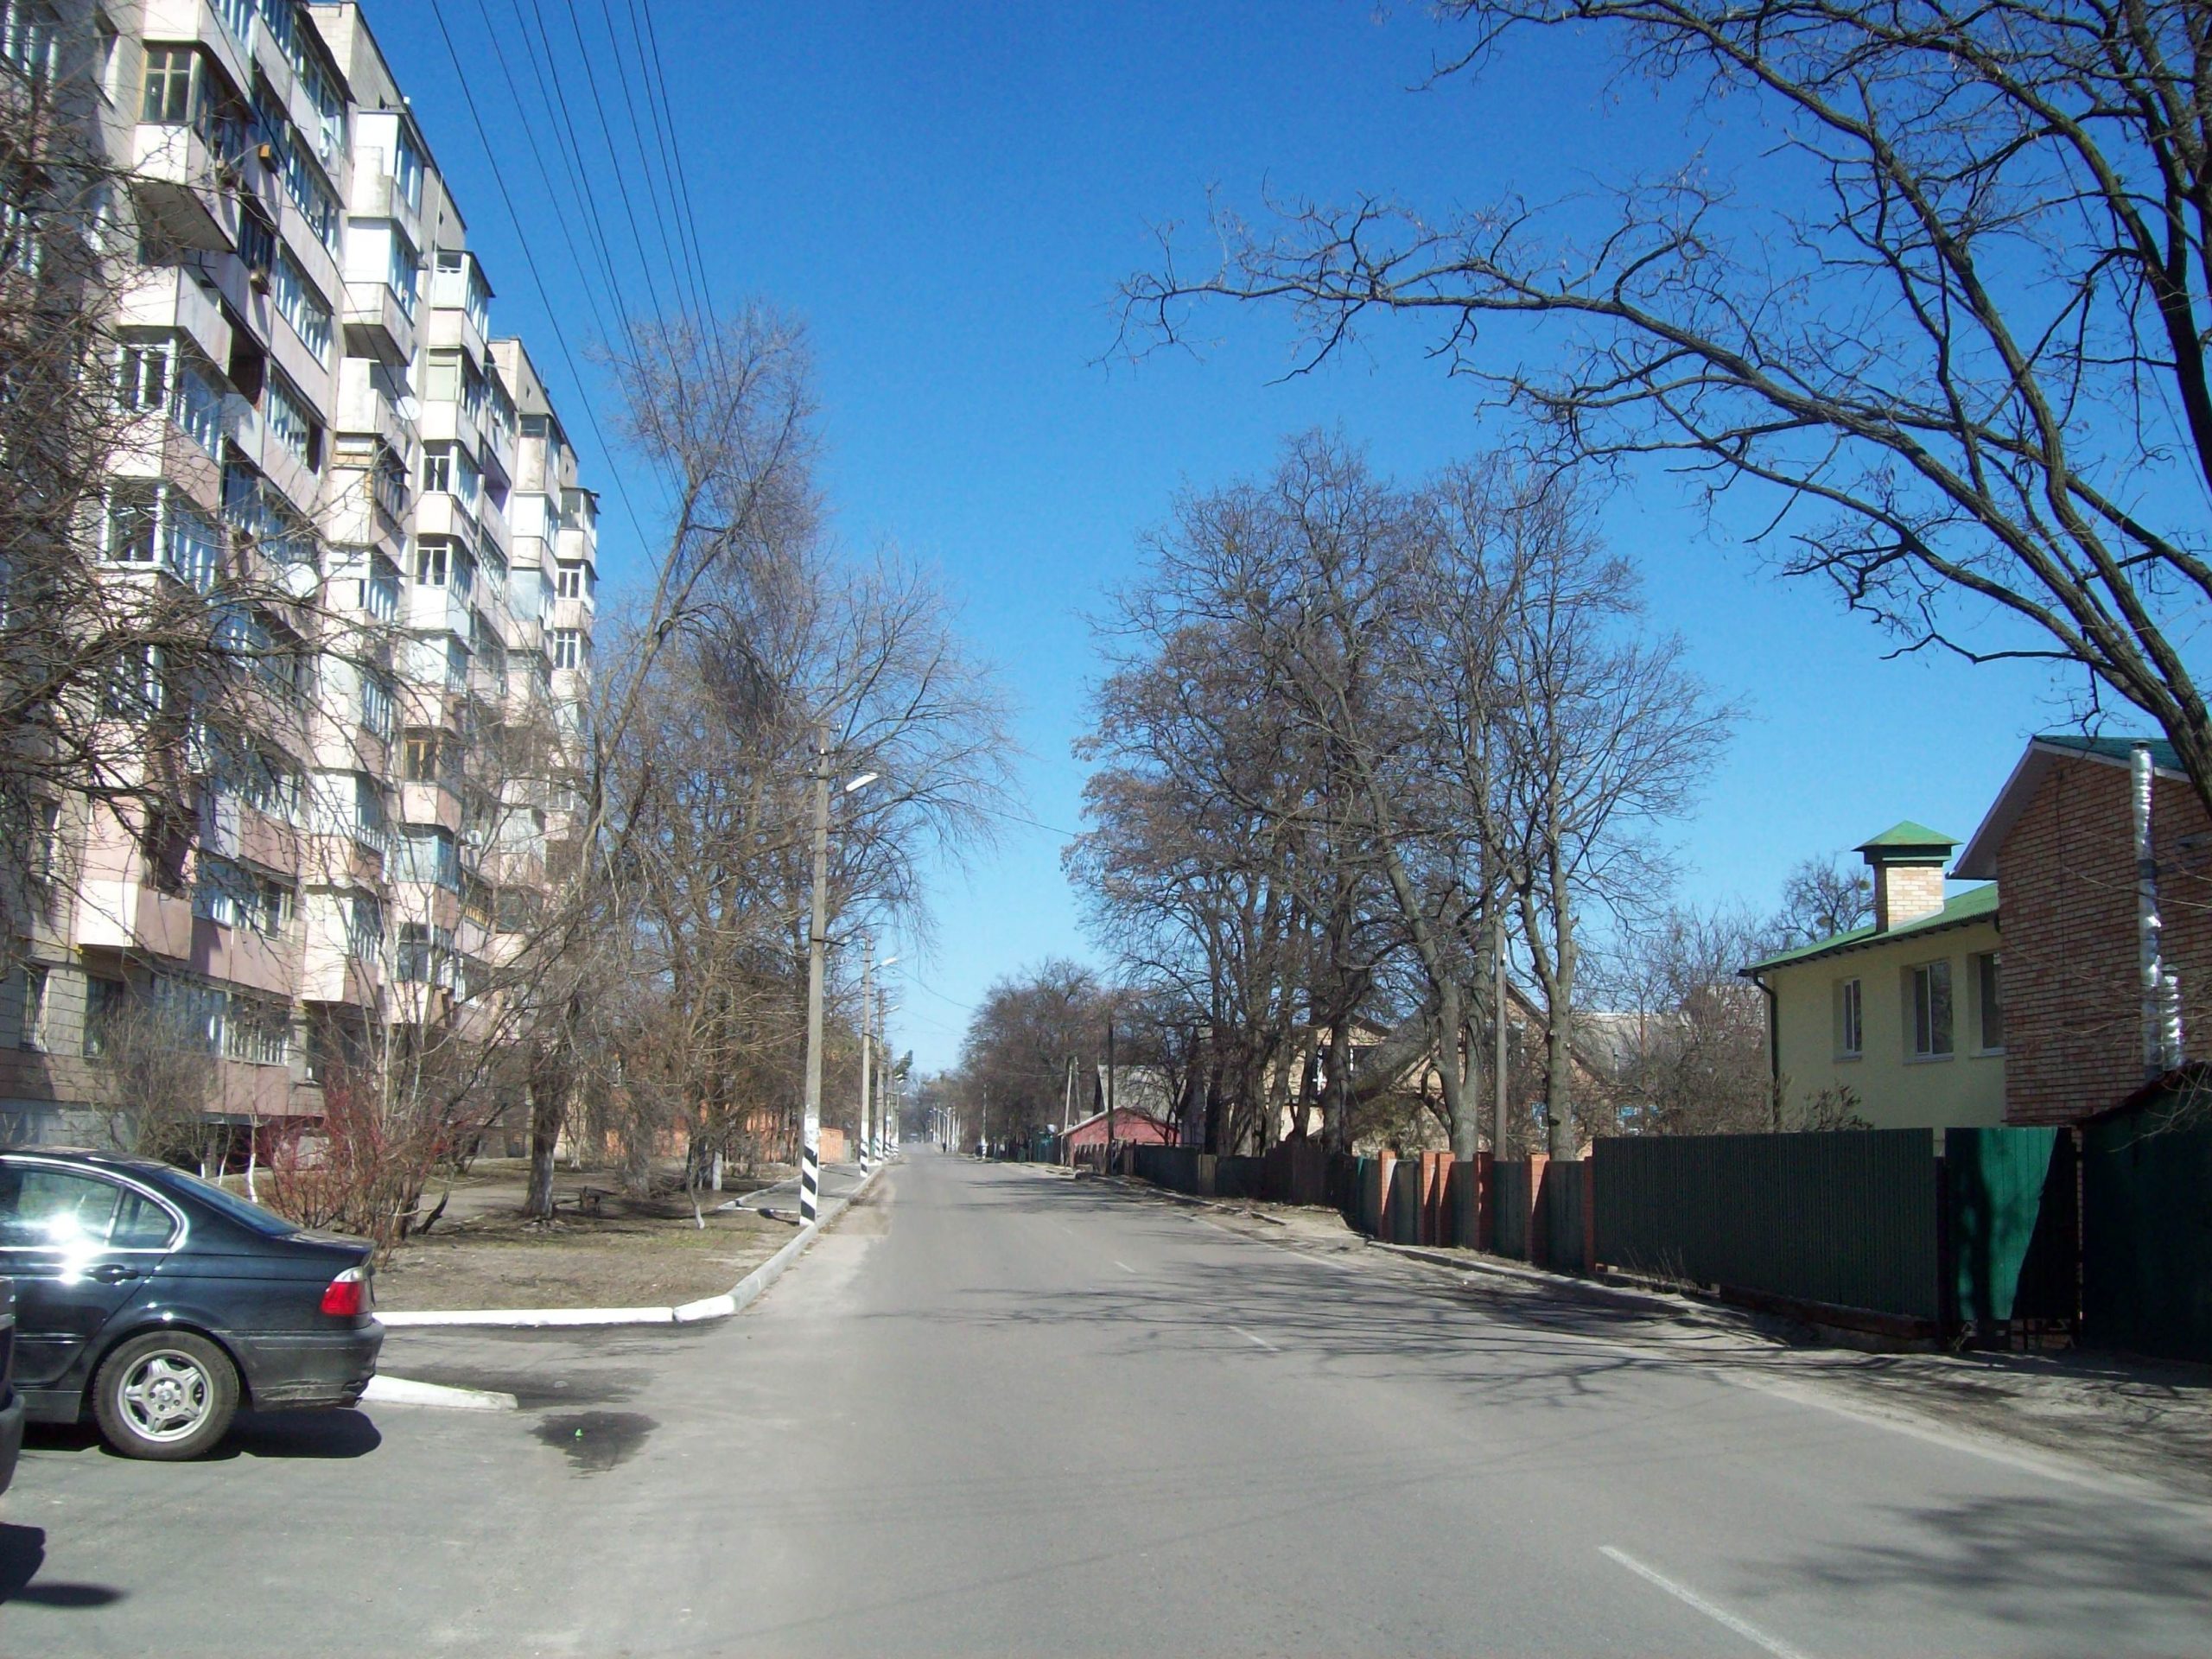 Neighborhood streets in Irpin.